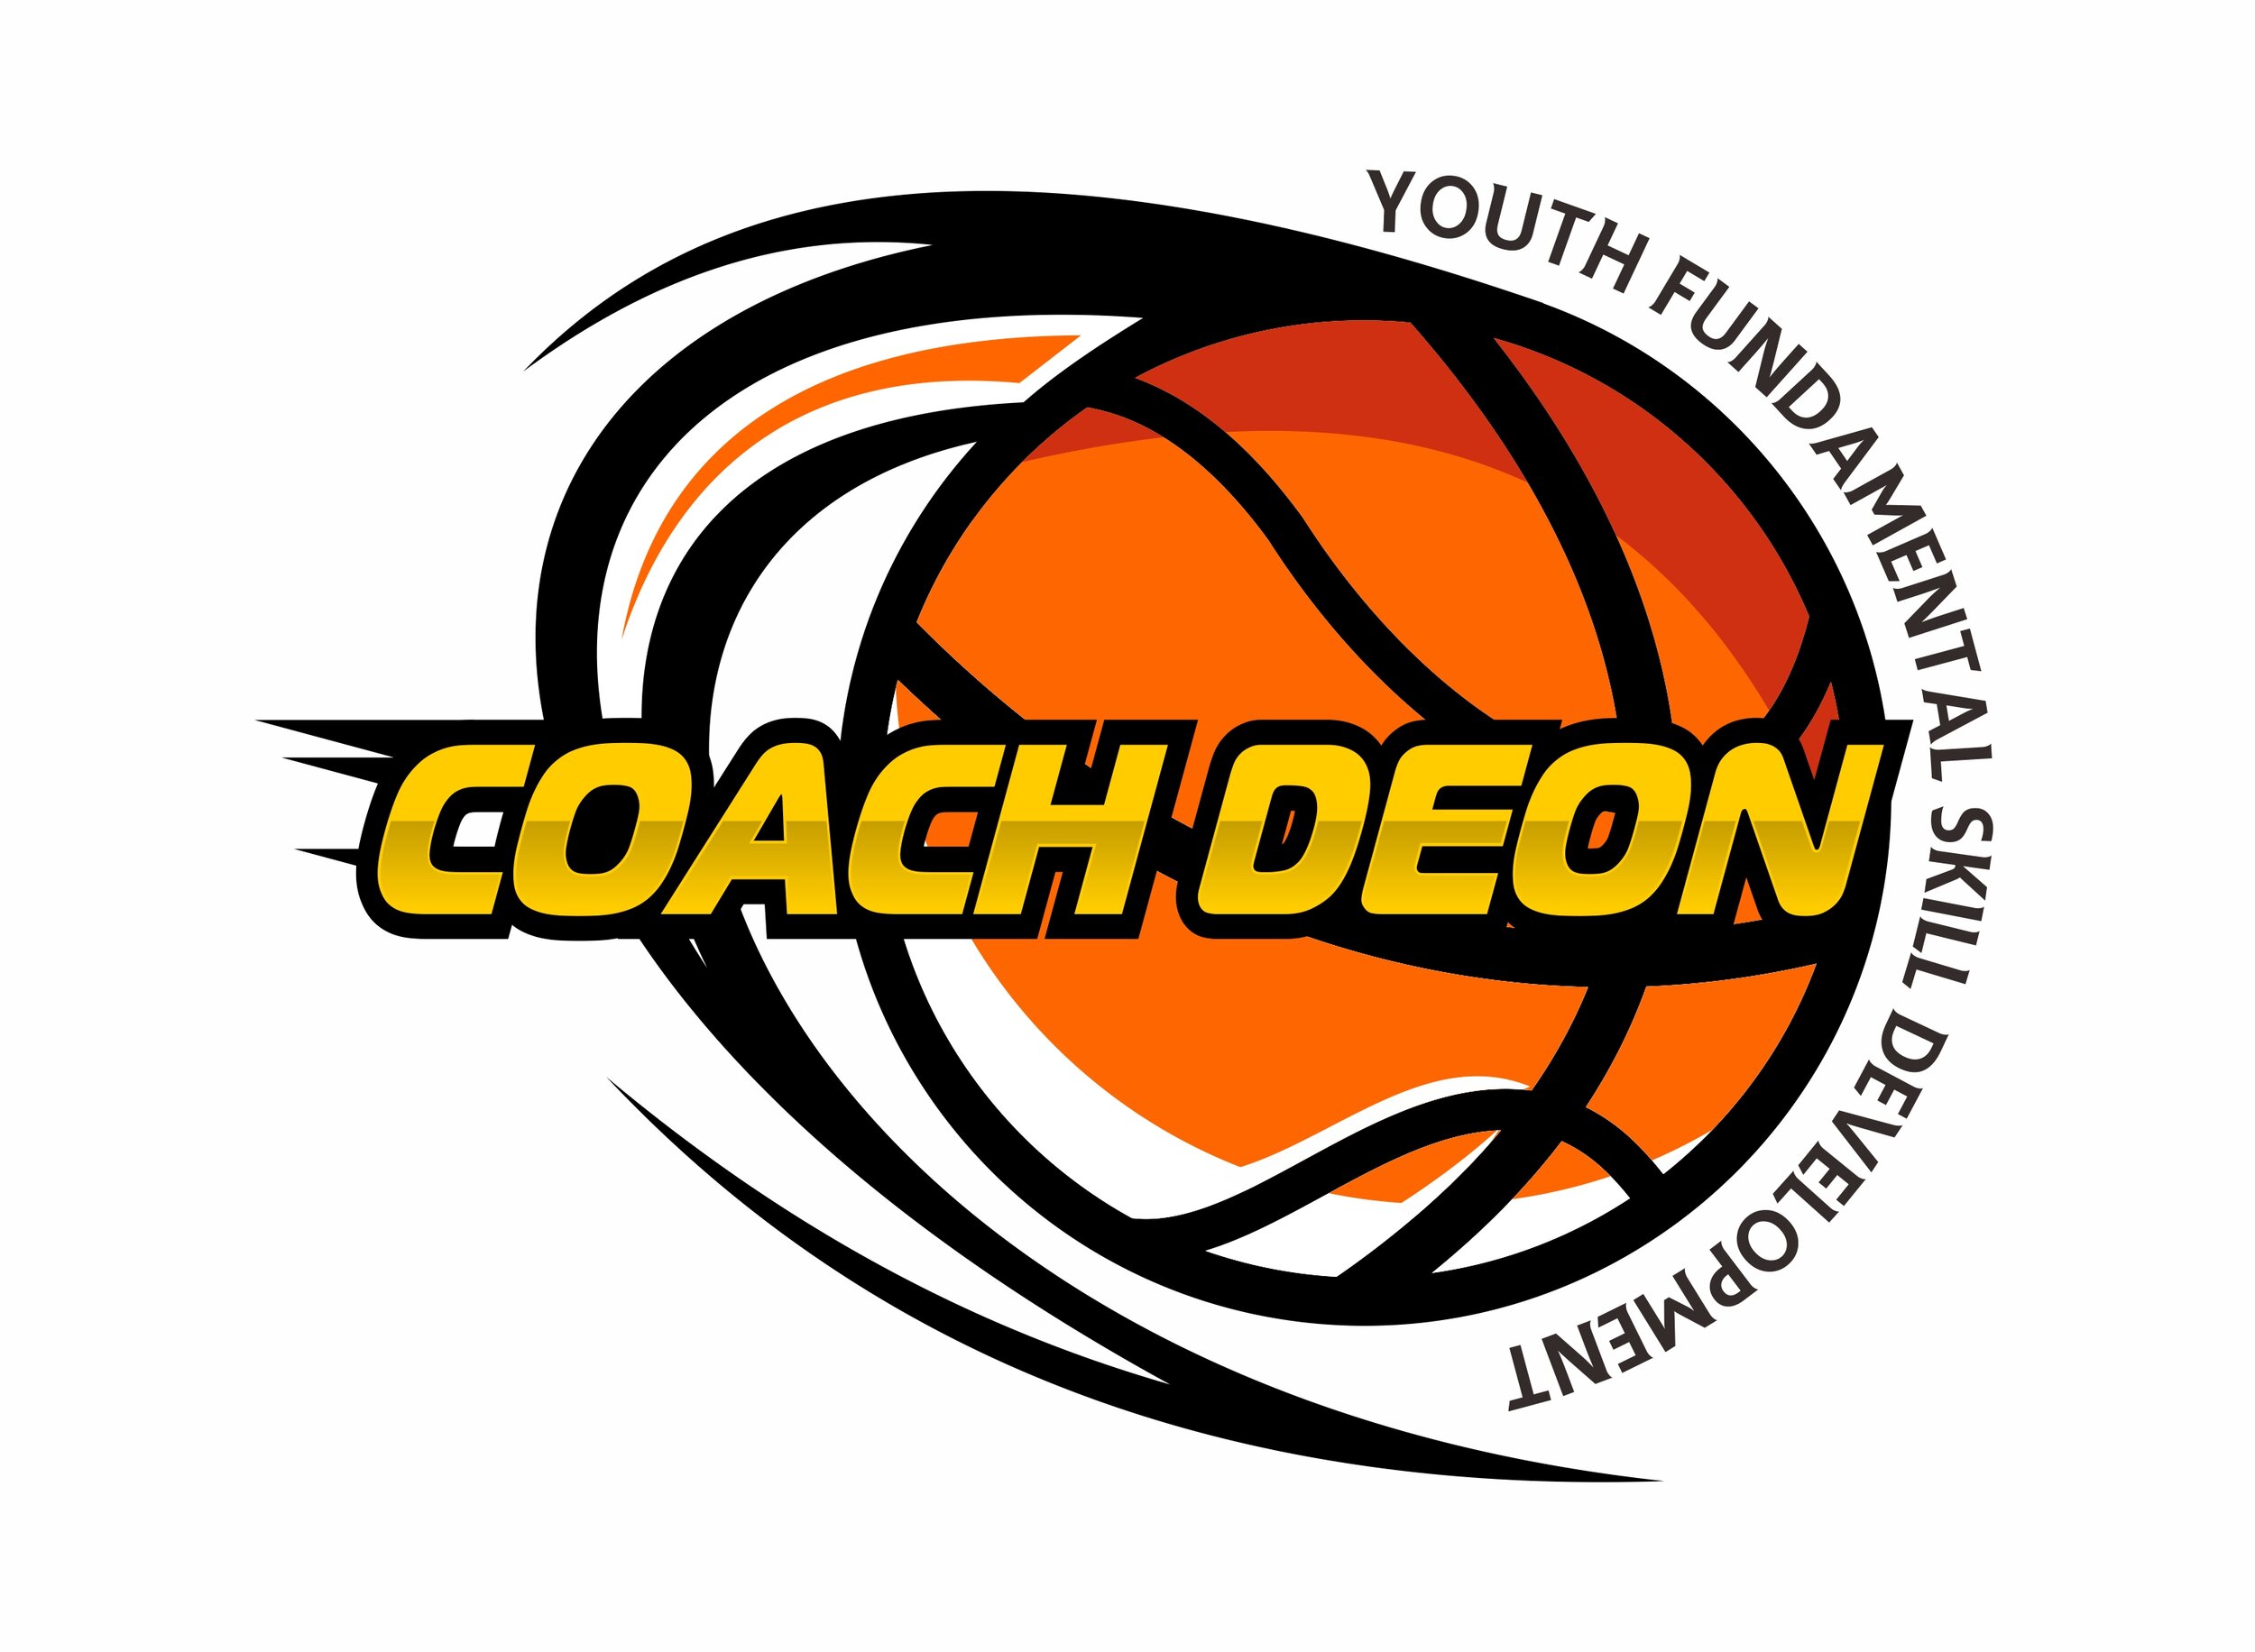 Coach Deon